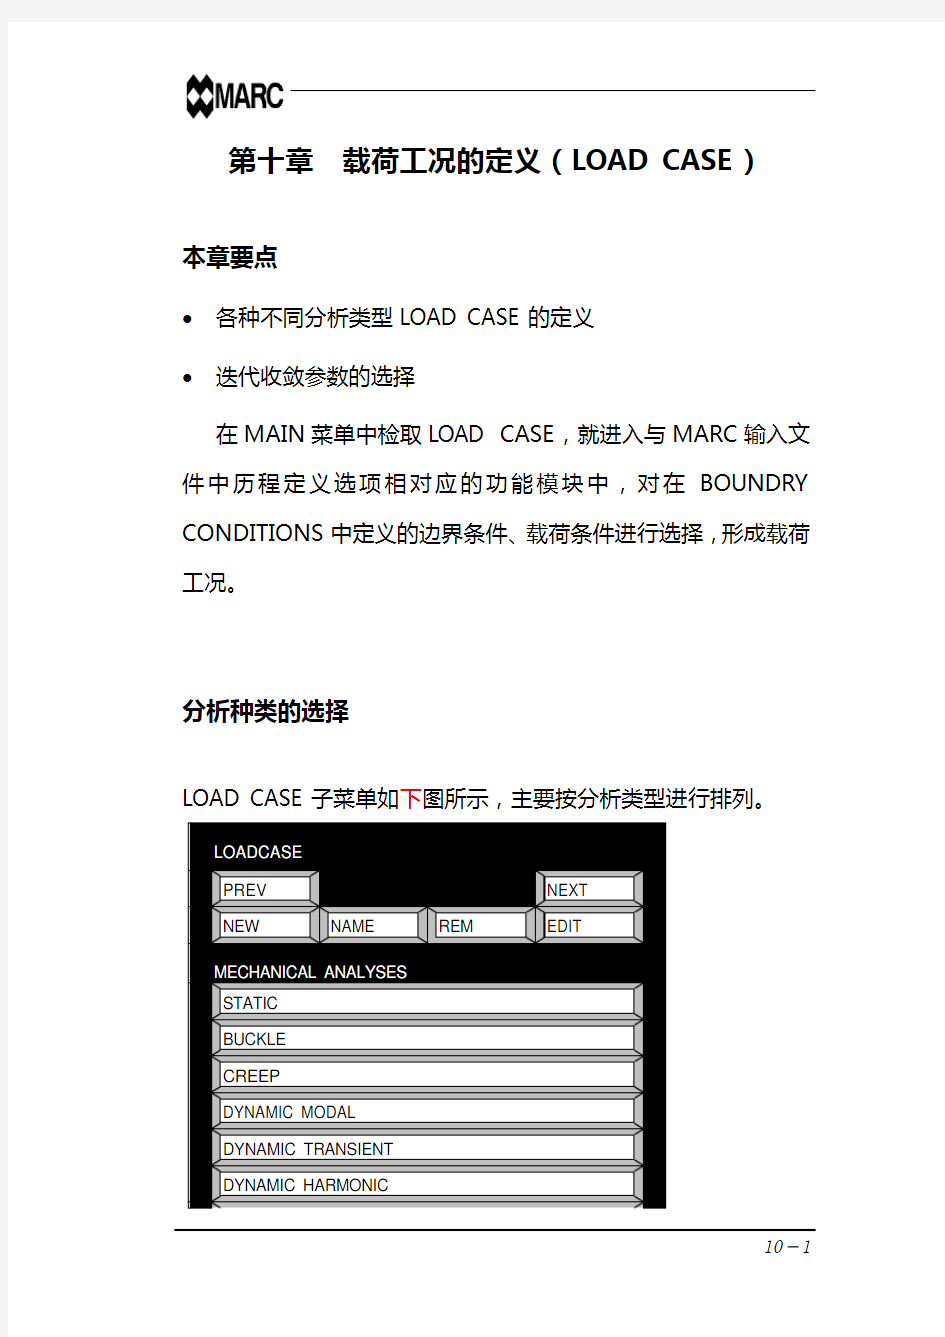 marc中文基本手册-第十章 载荷工况的定义(LOAD CASE)